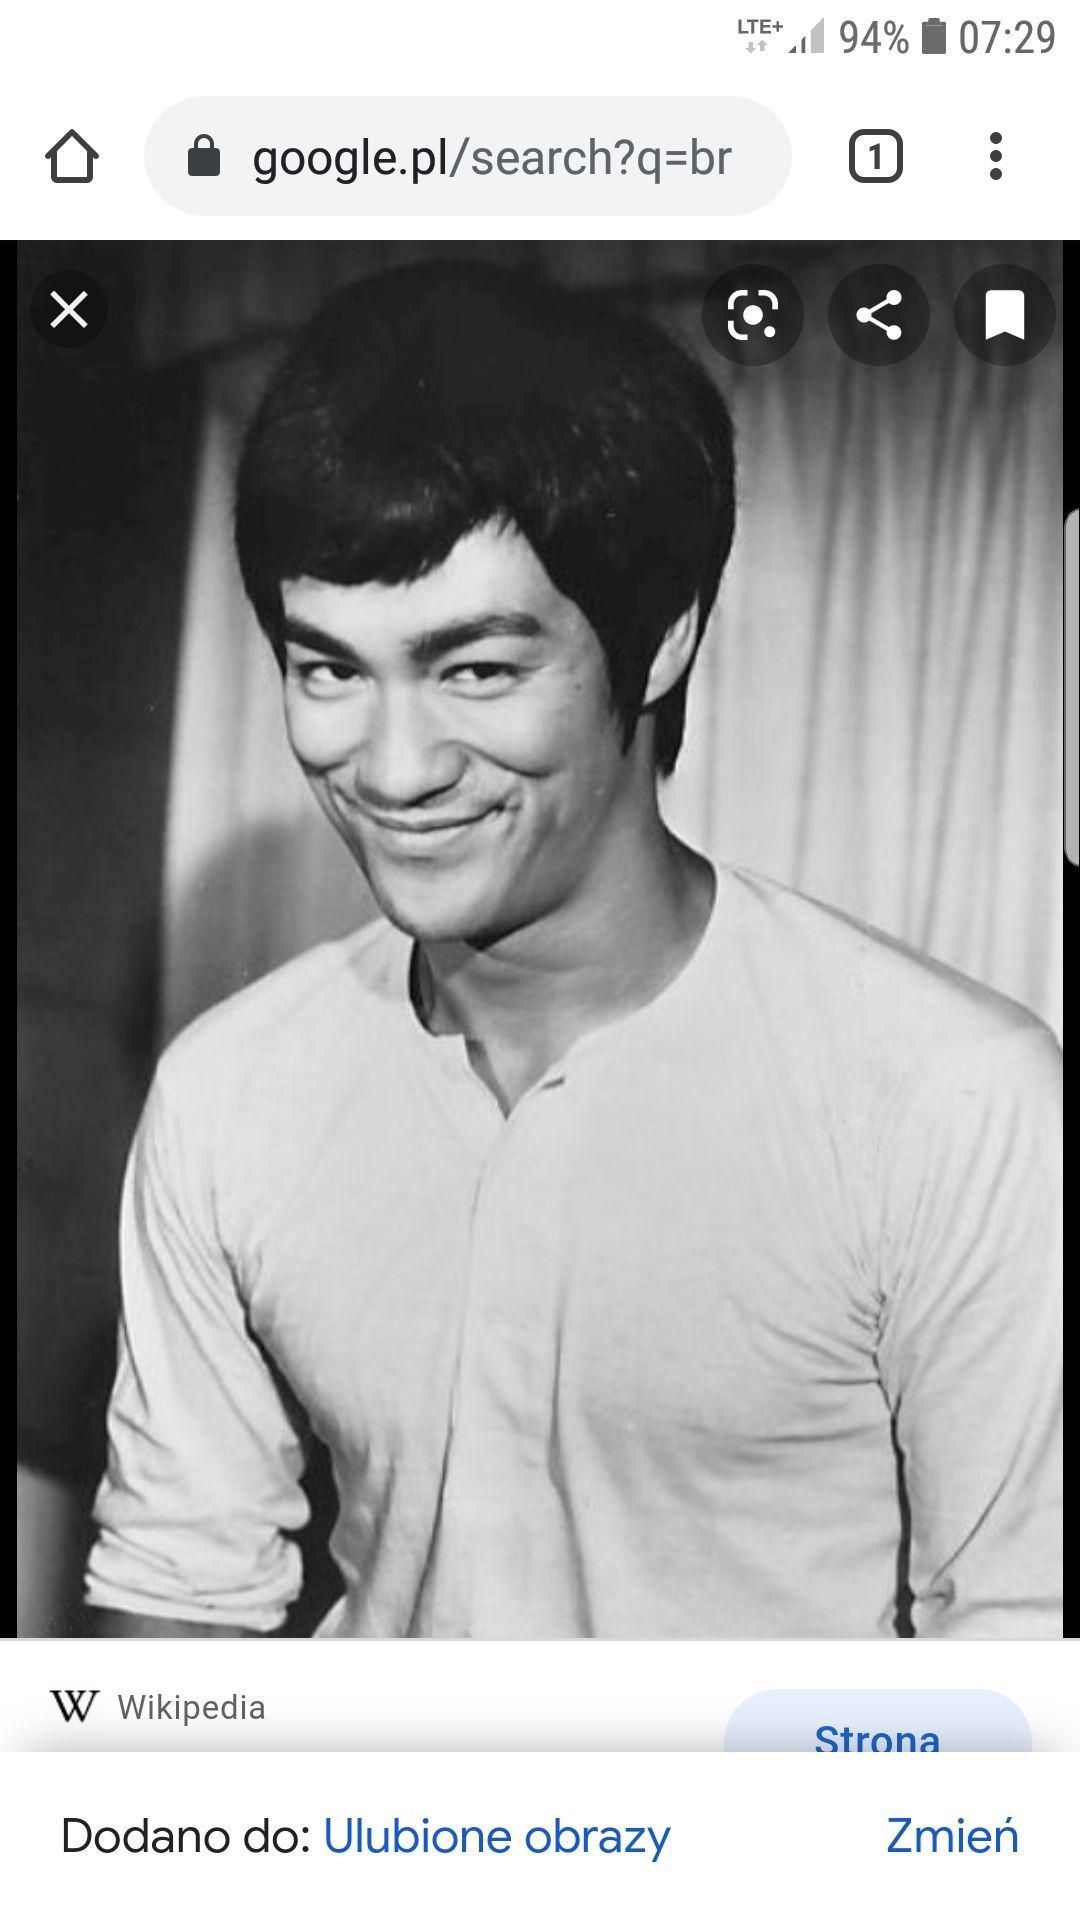 Bruce Lee obraz olejny na płótnie.